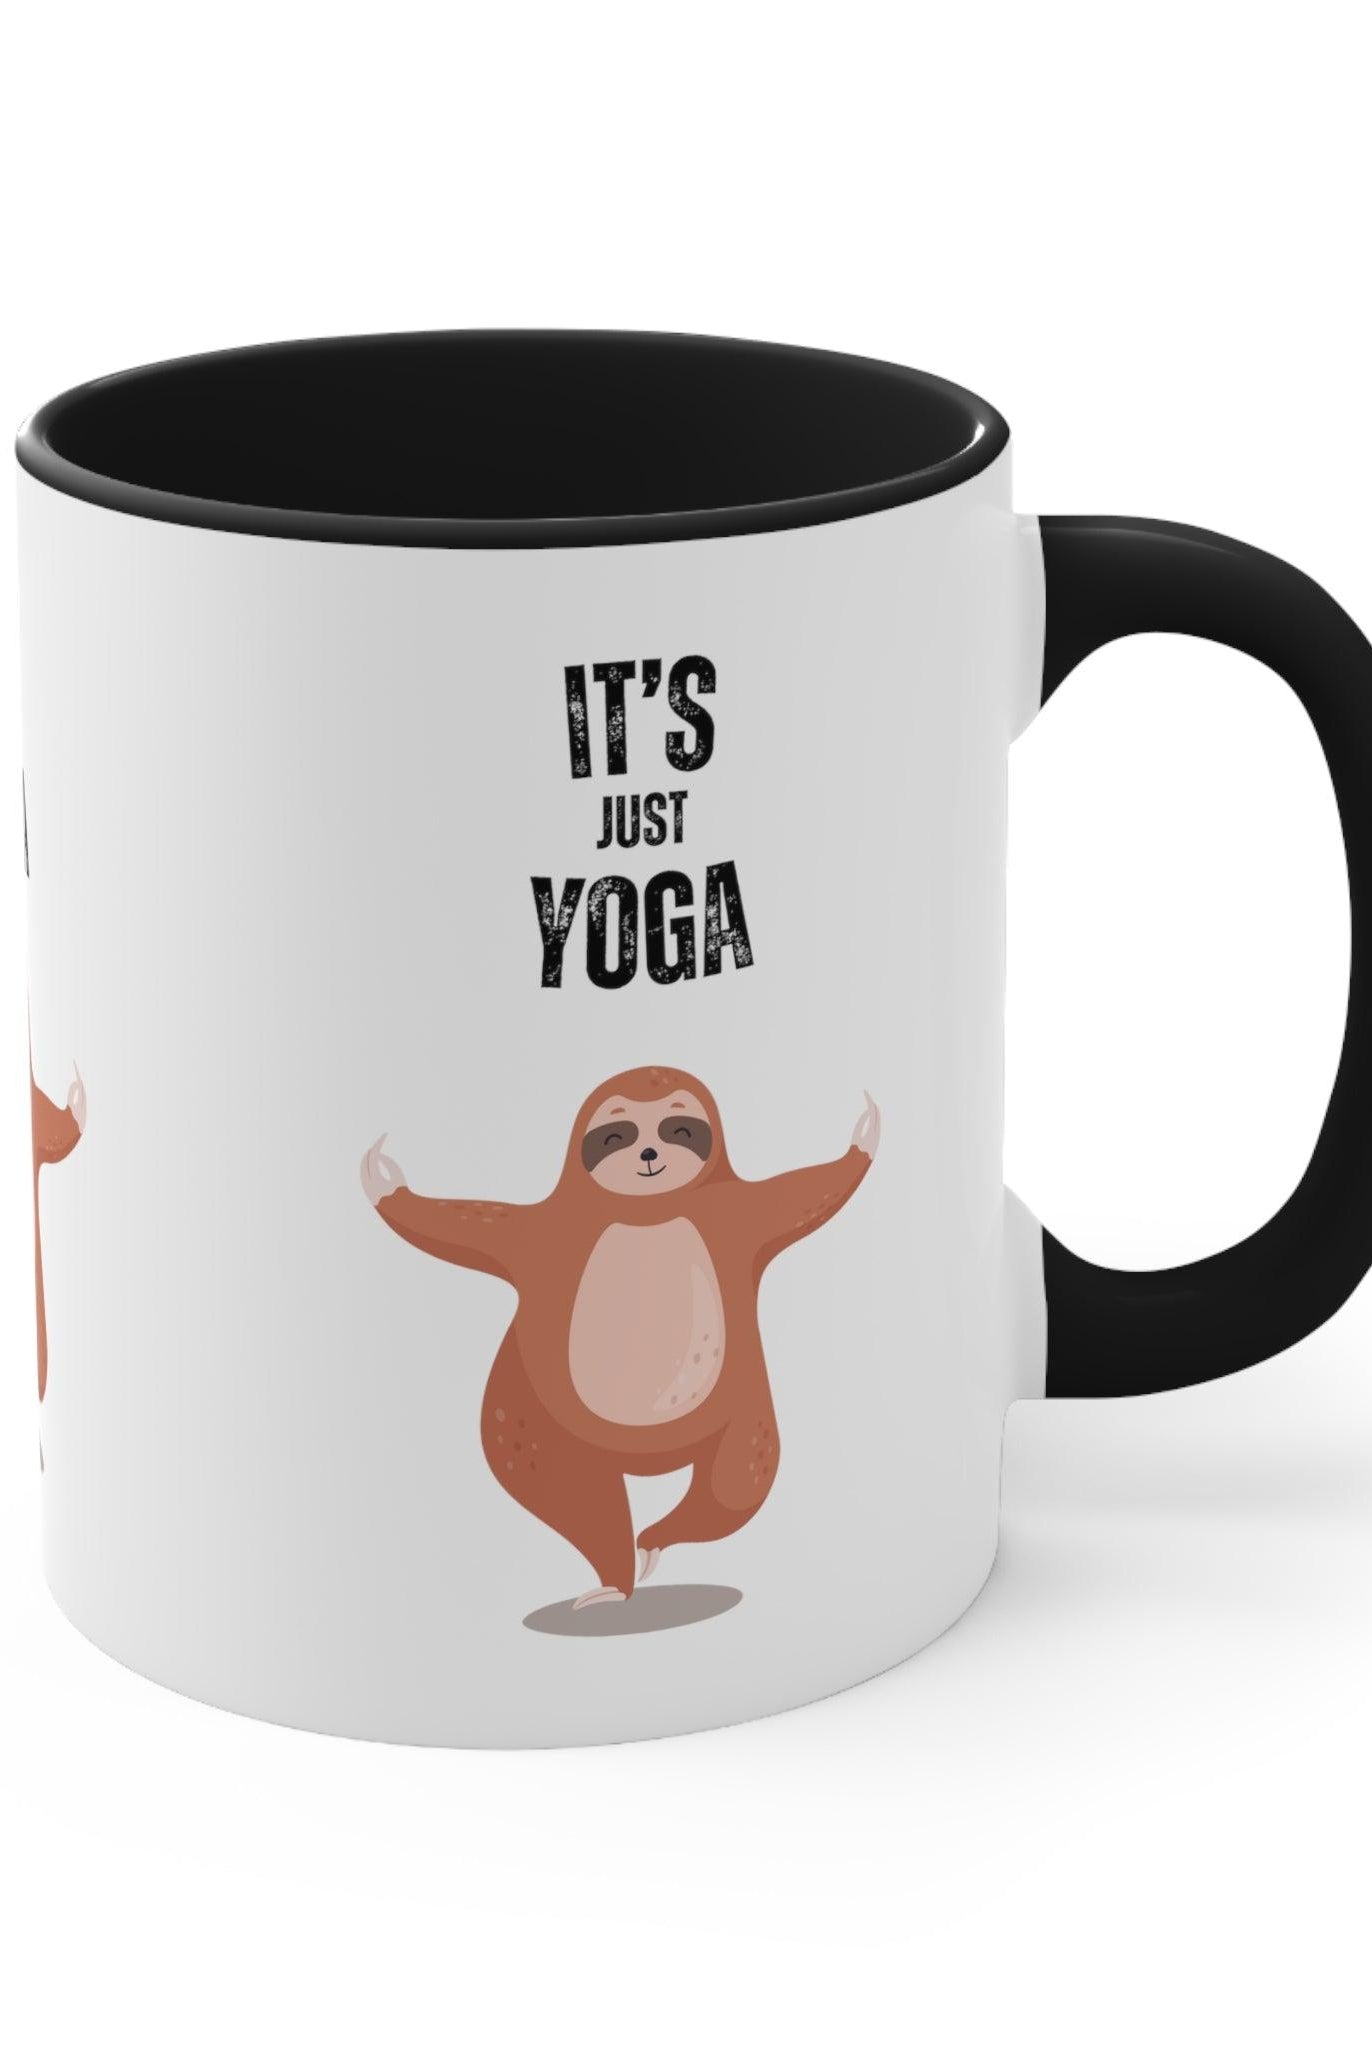 It's Just Yoga Black - Accent Coffee Mug, 11oz - Soulshinecreators - 11 oz